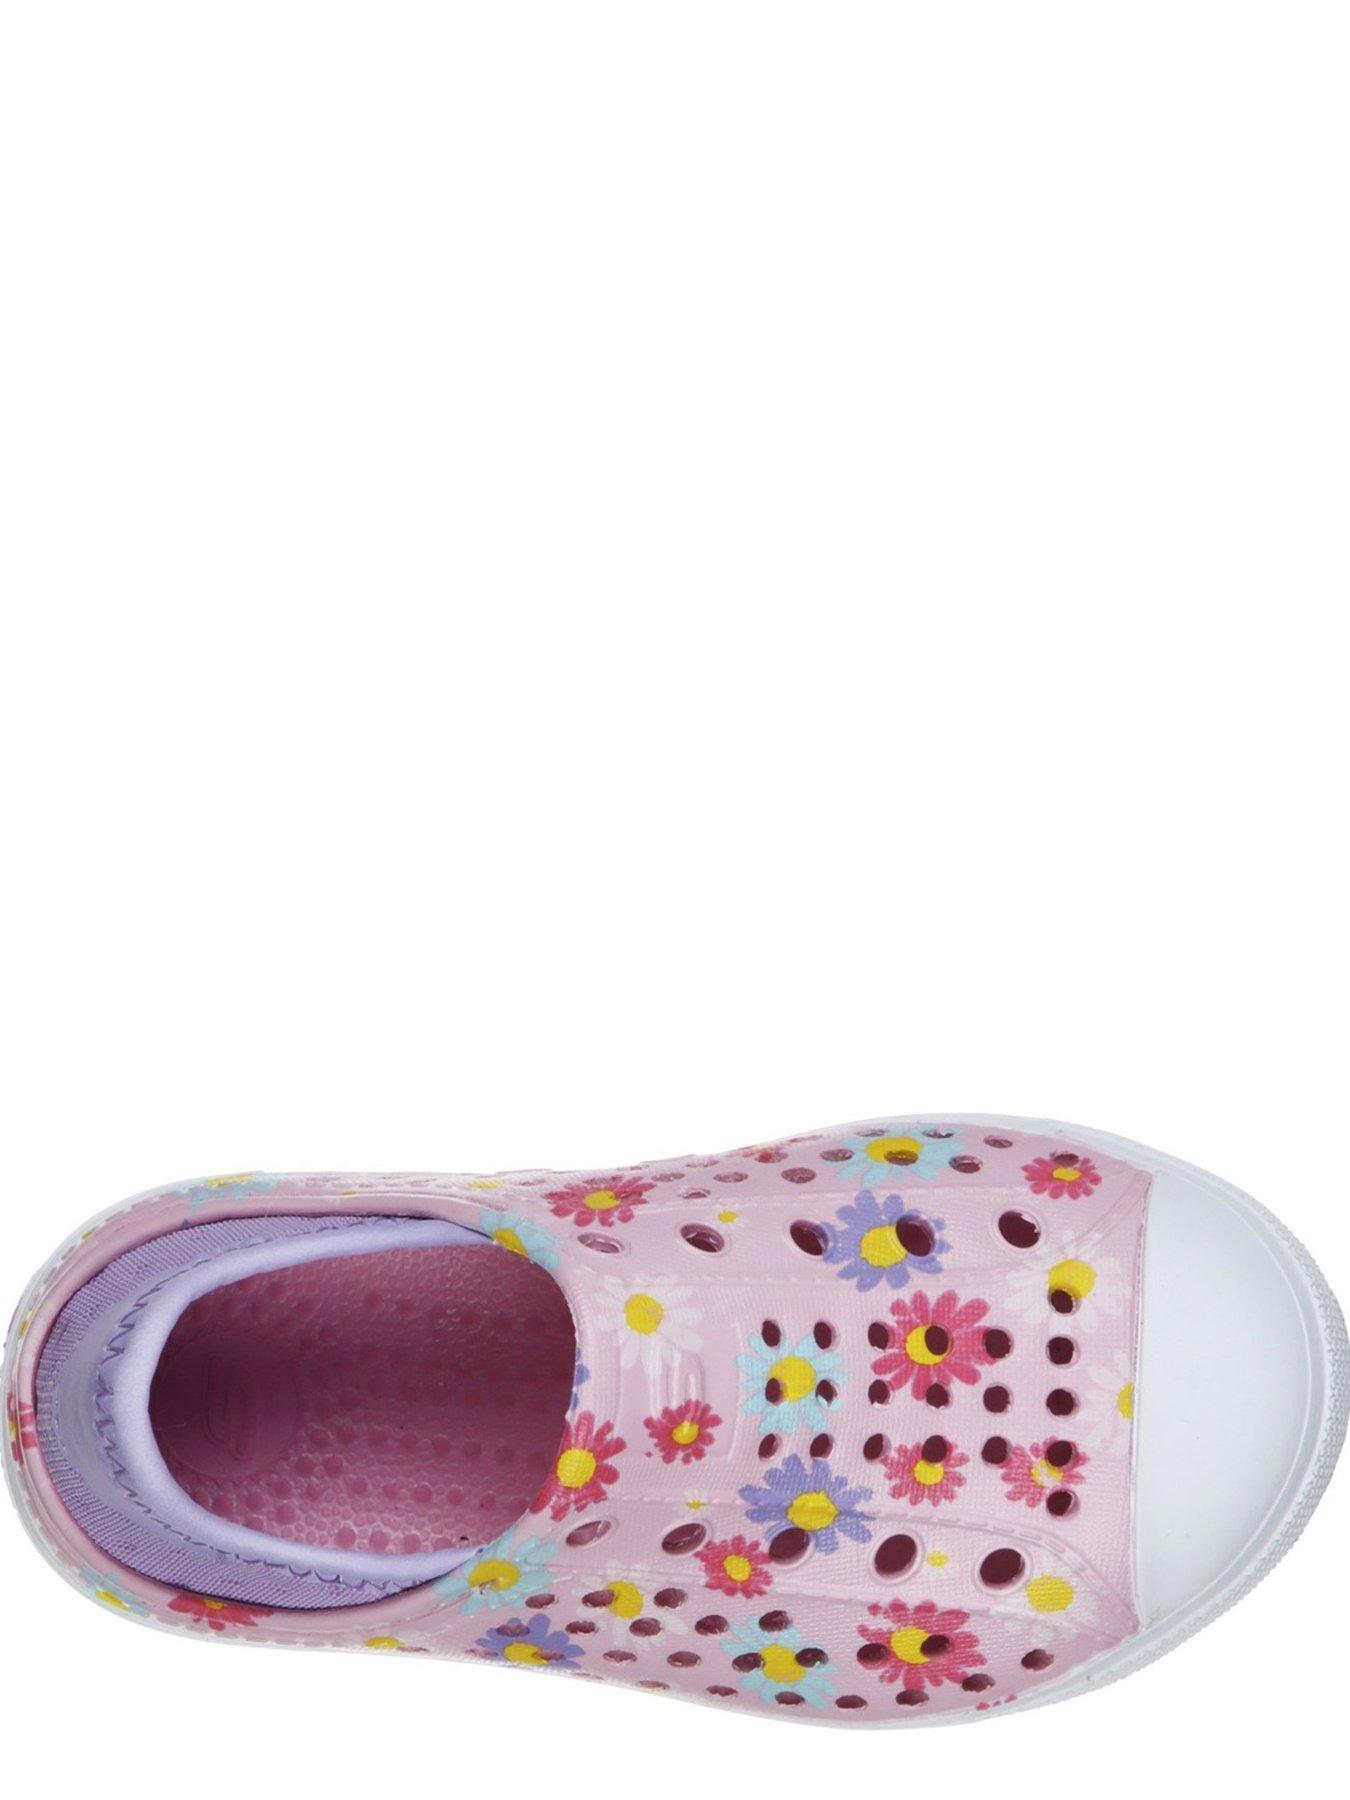  Toddler Girls Floral Guzman Sandals - Pink